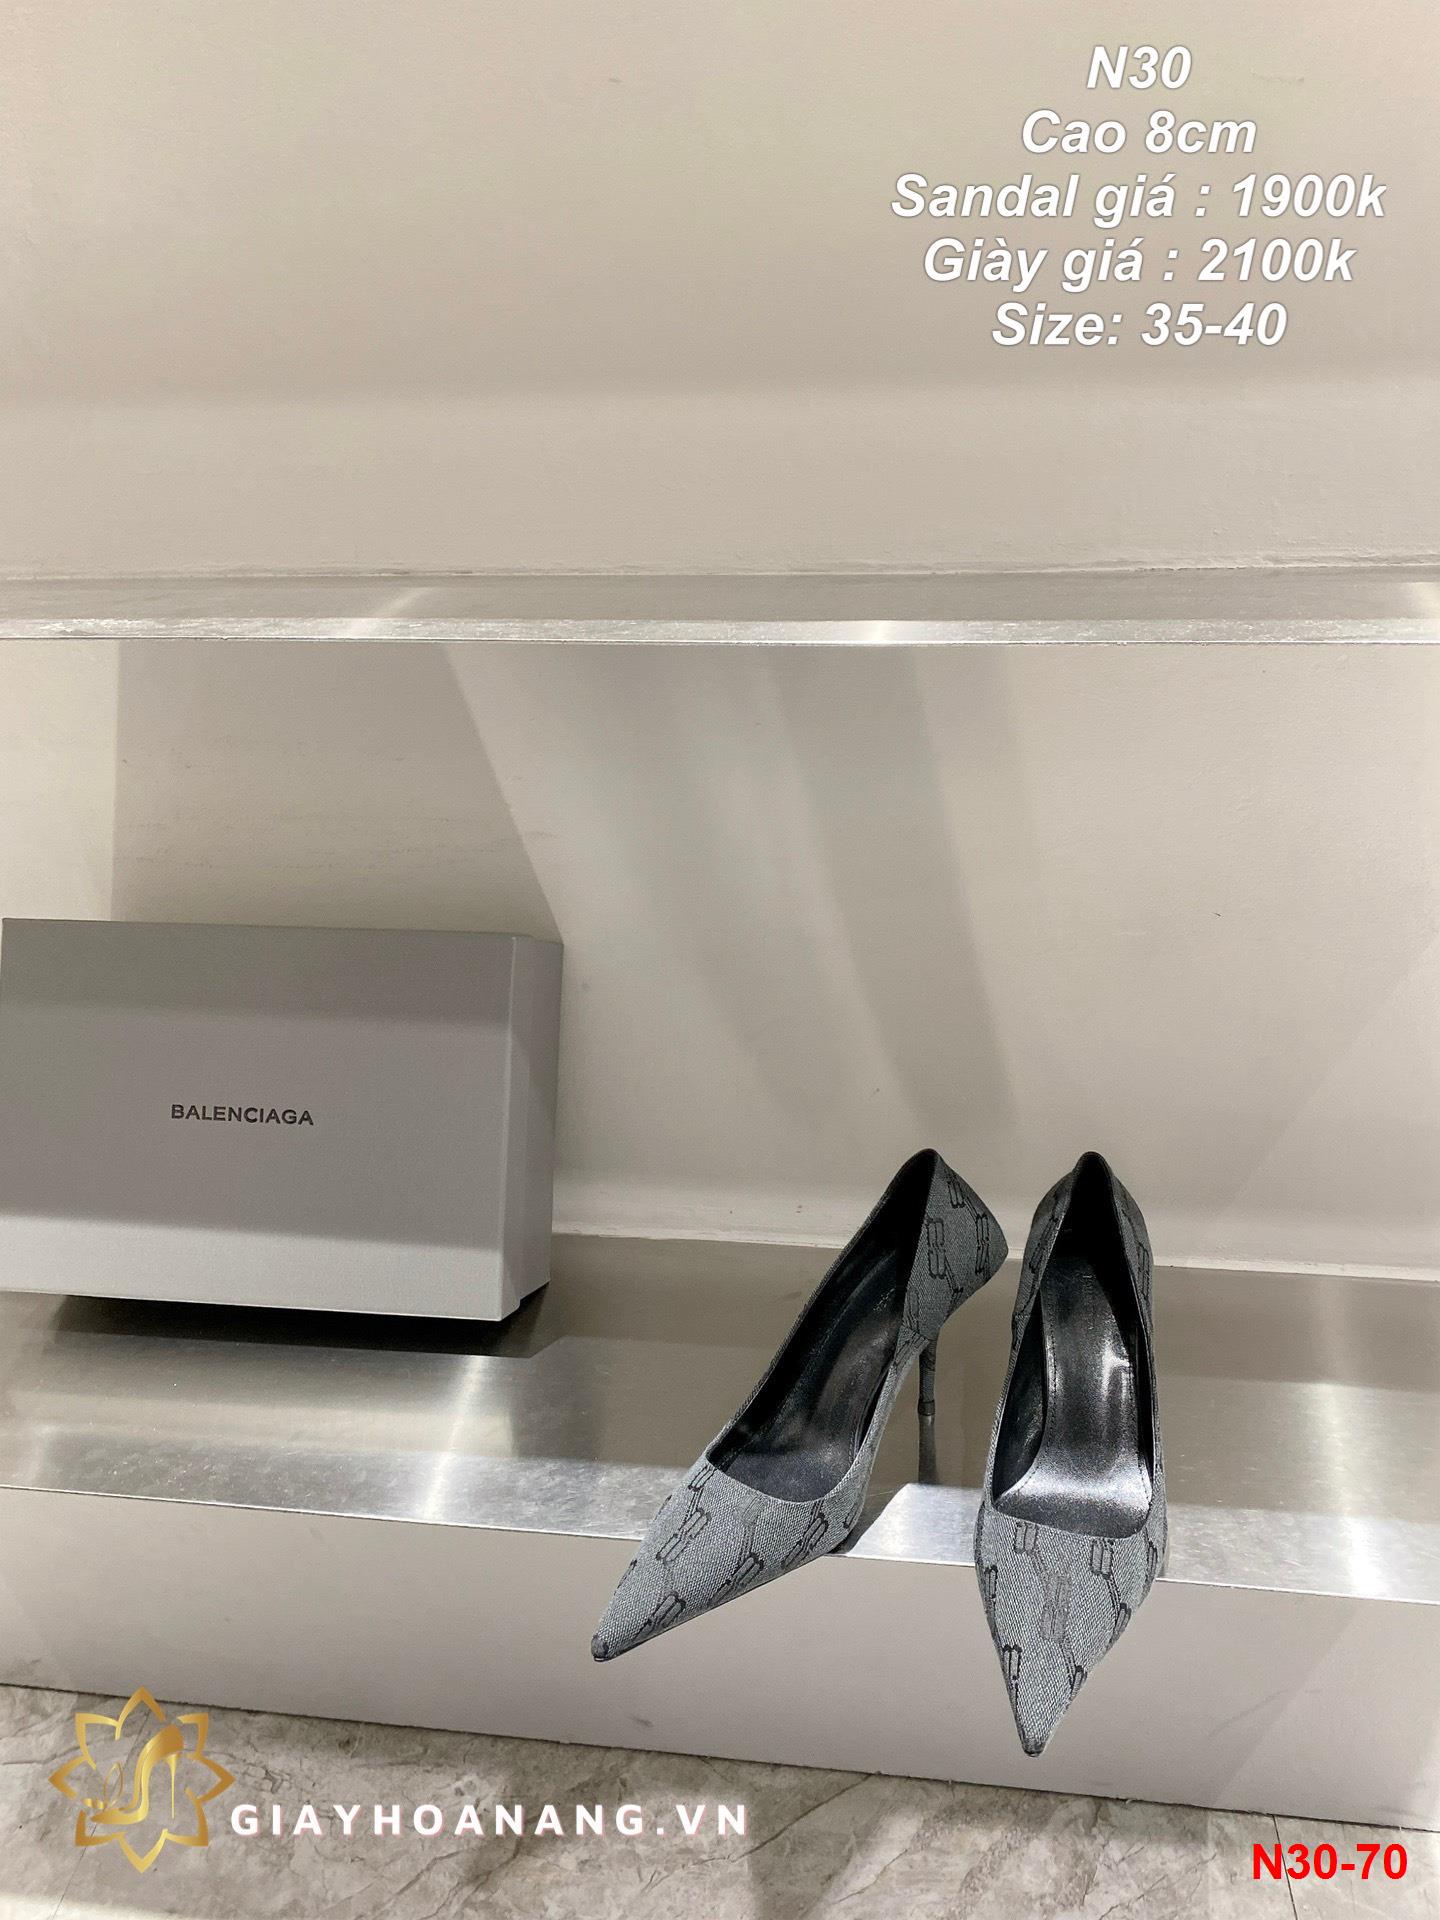 N30-70 Balenciaga giày cao 8cm siêu cấp